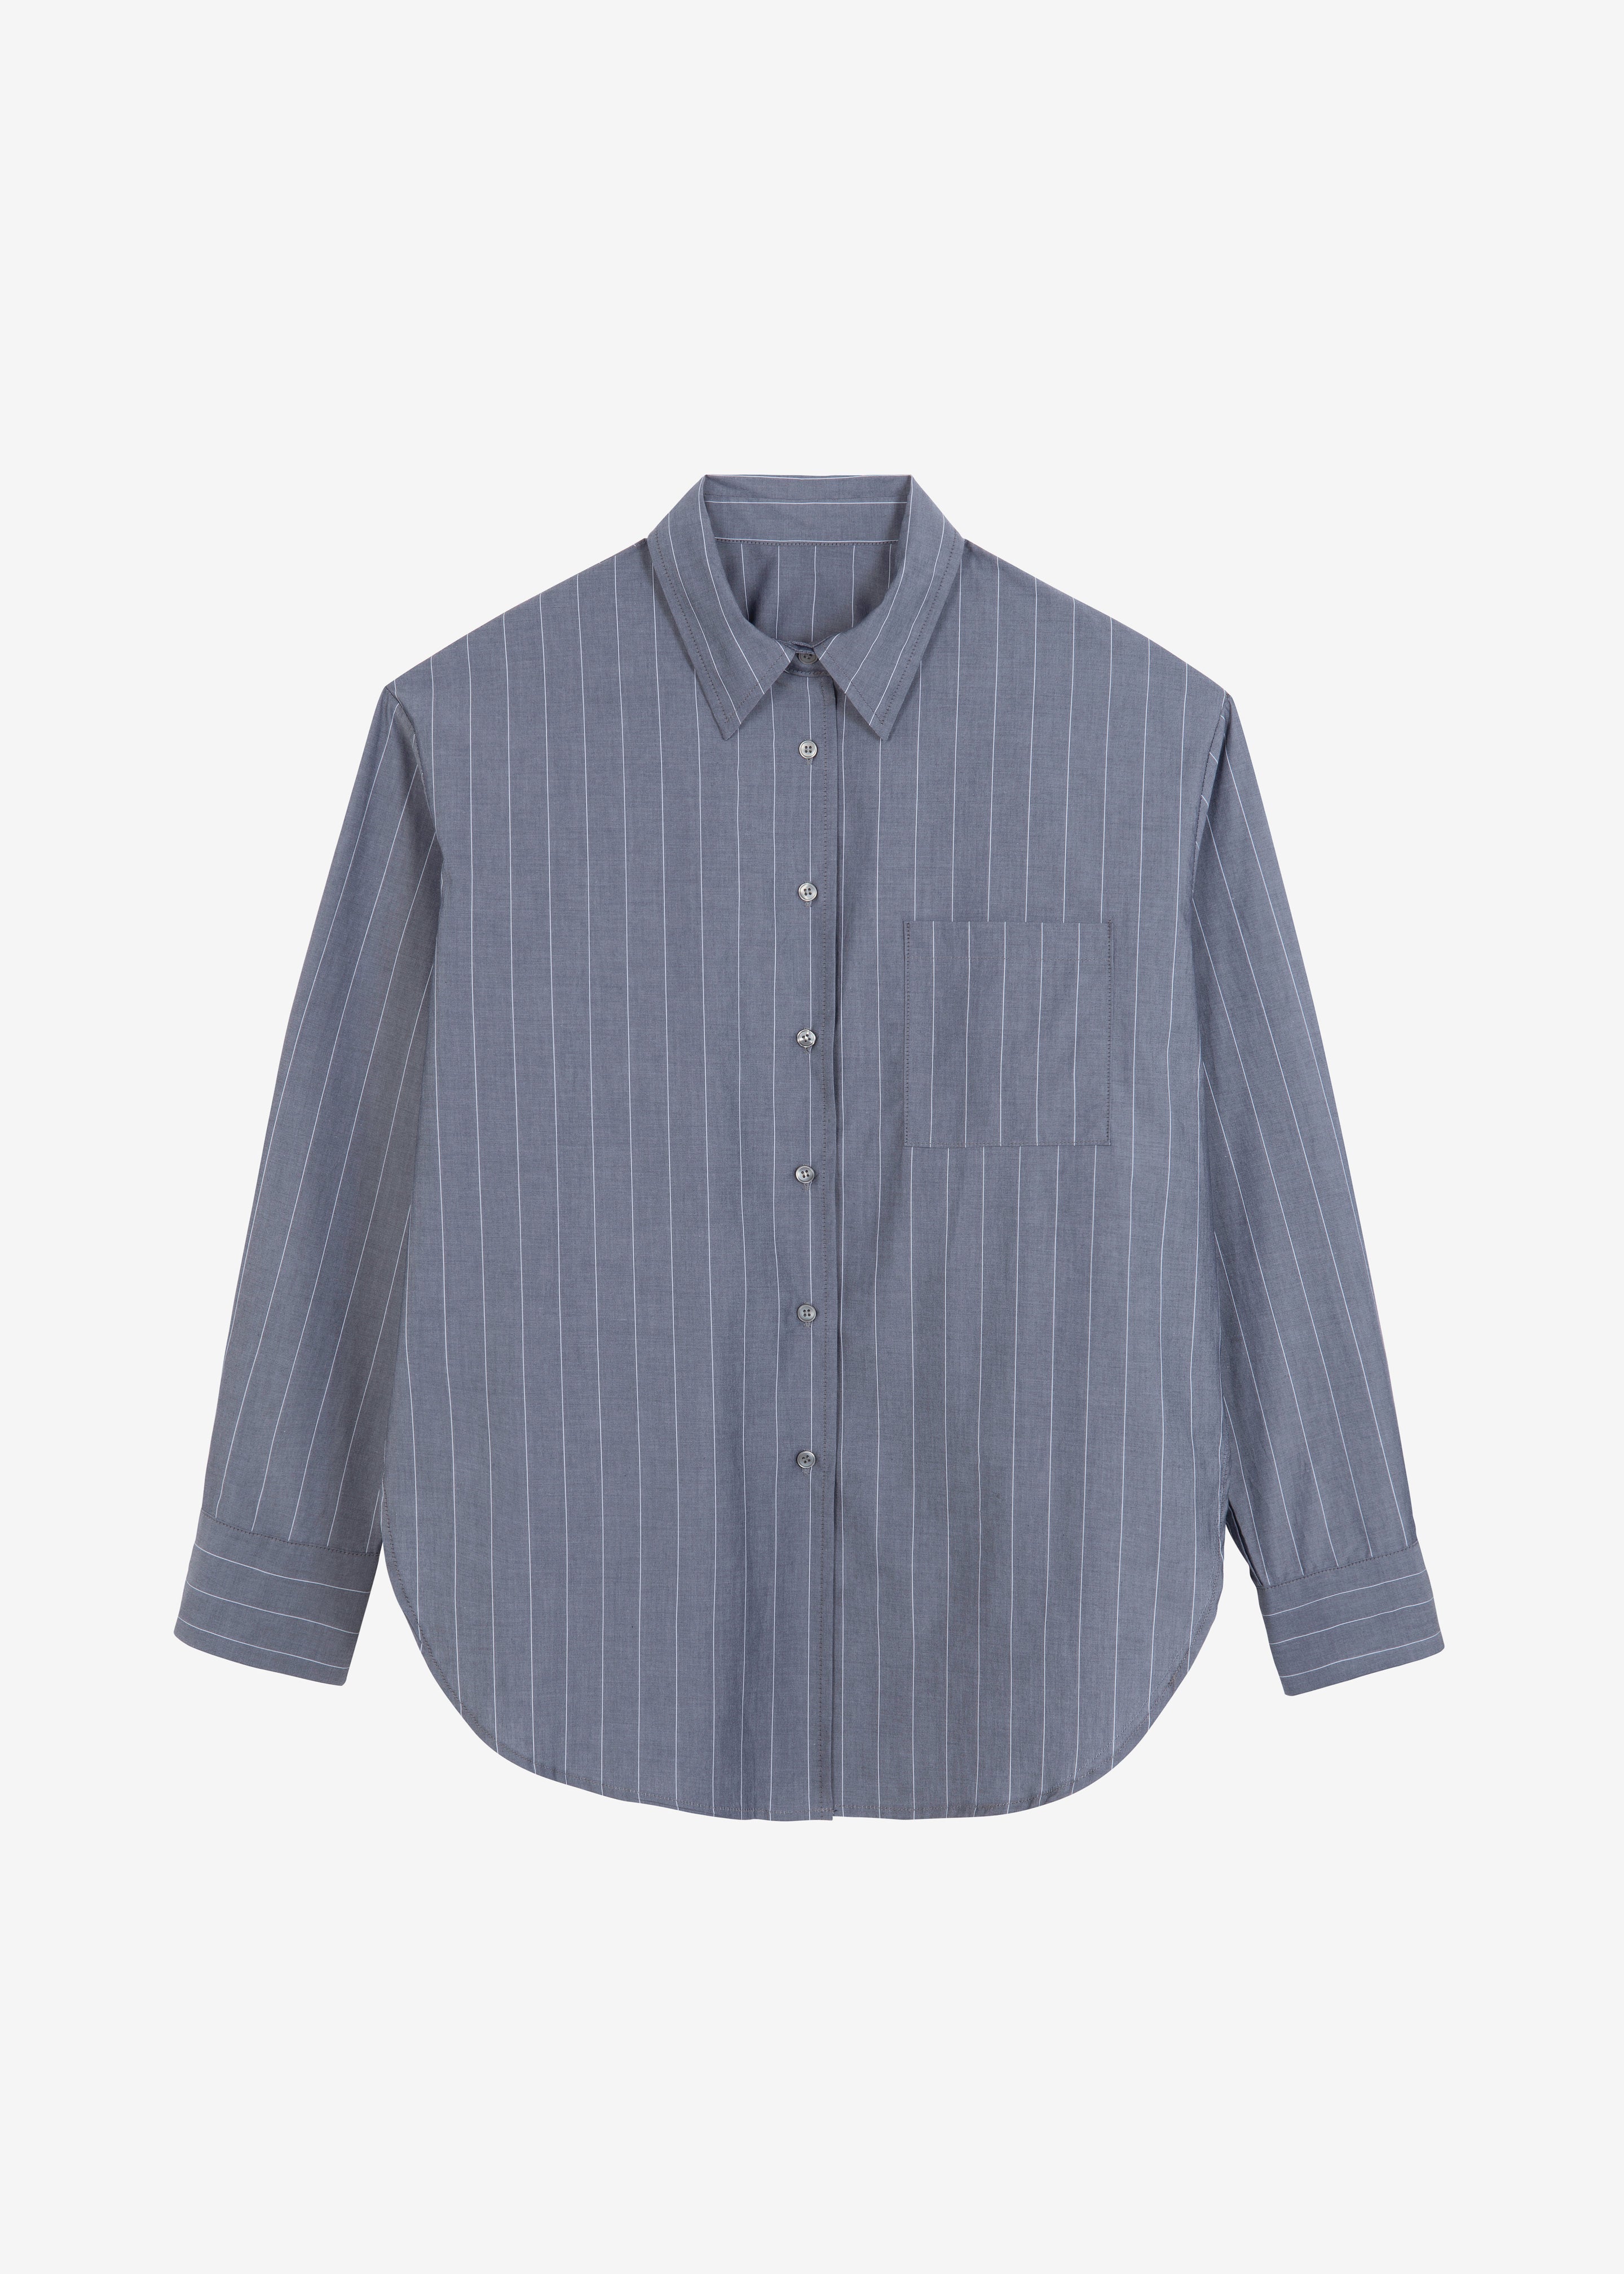 Beatrix Button Up Shirt - Grey/White Pinstripe - 10